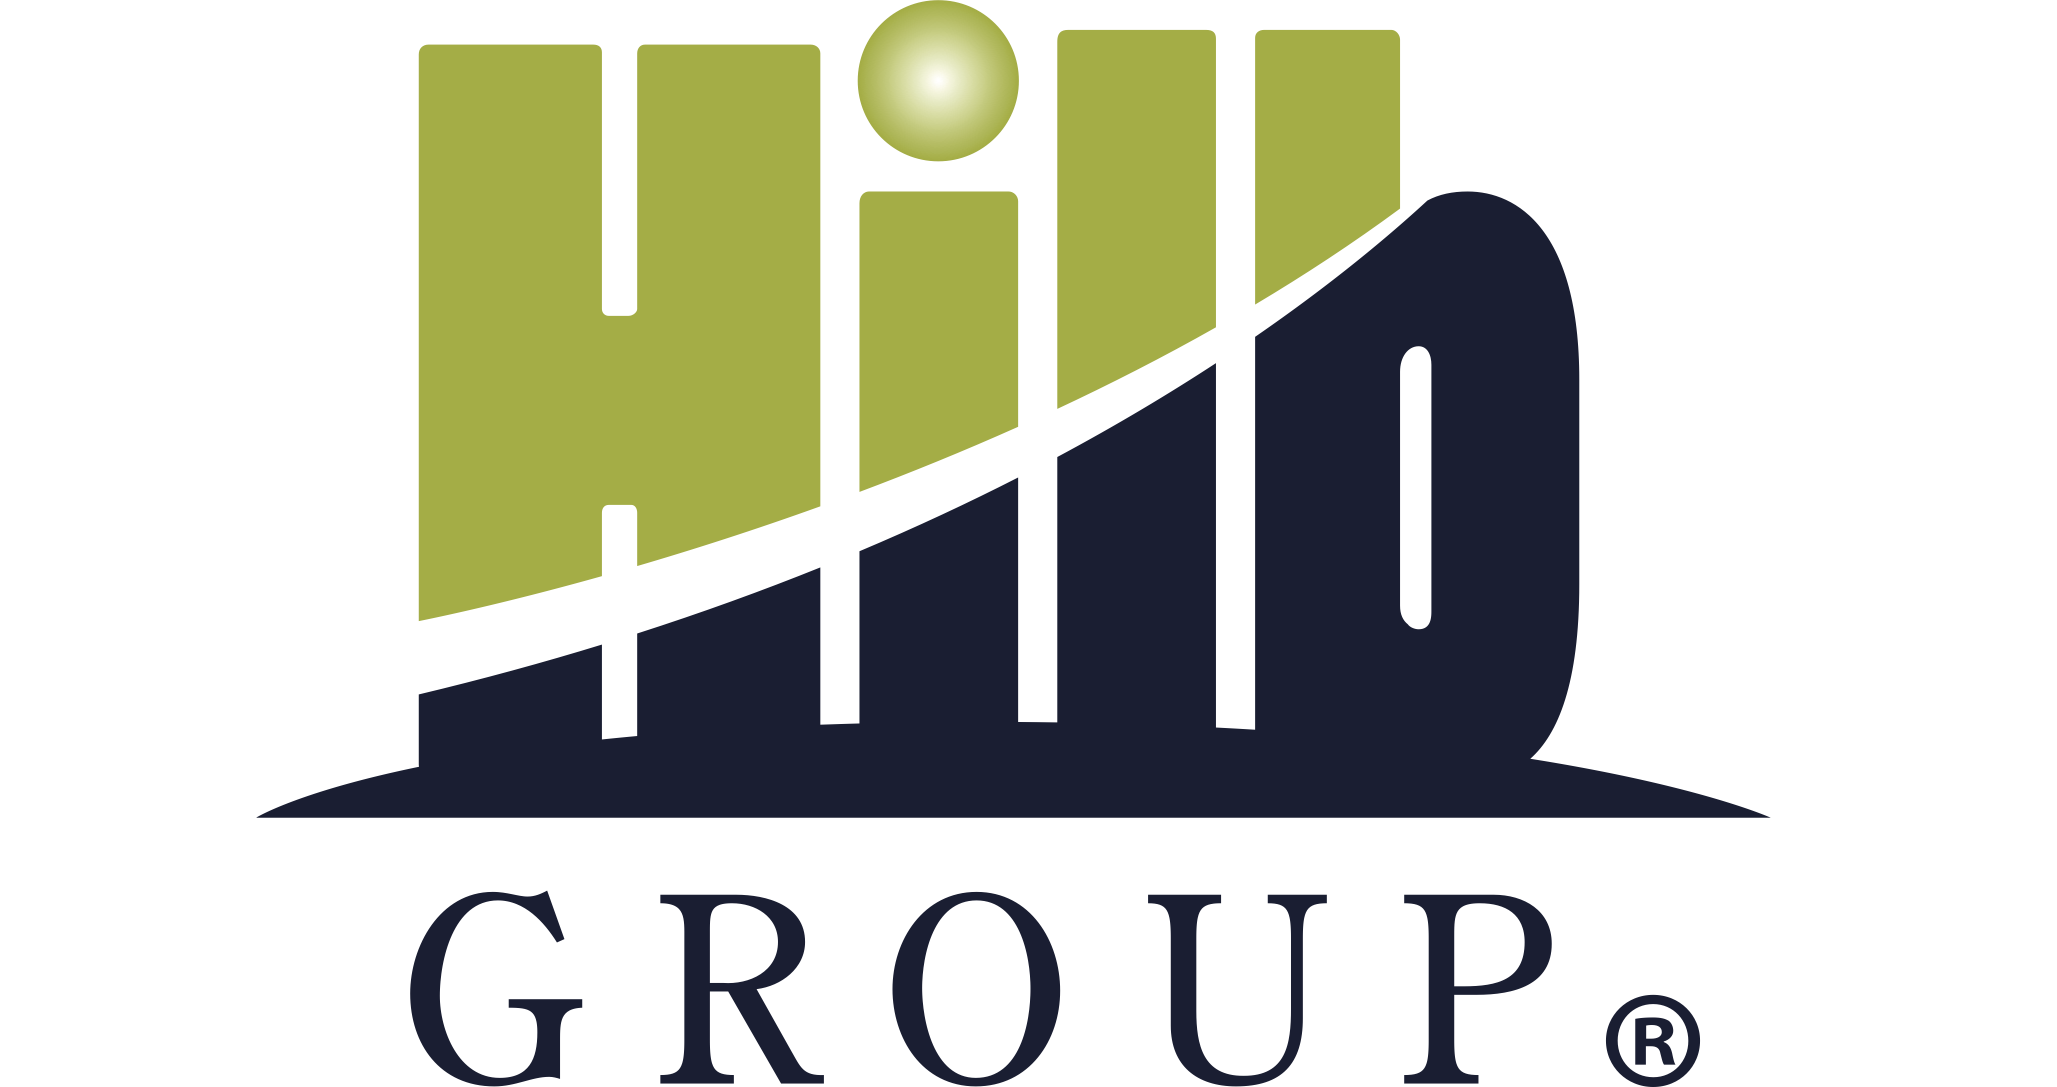 hilb group logo png.png